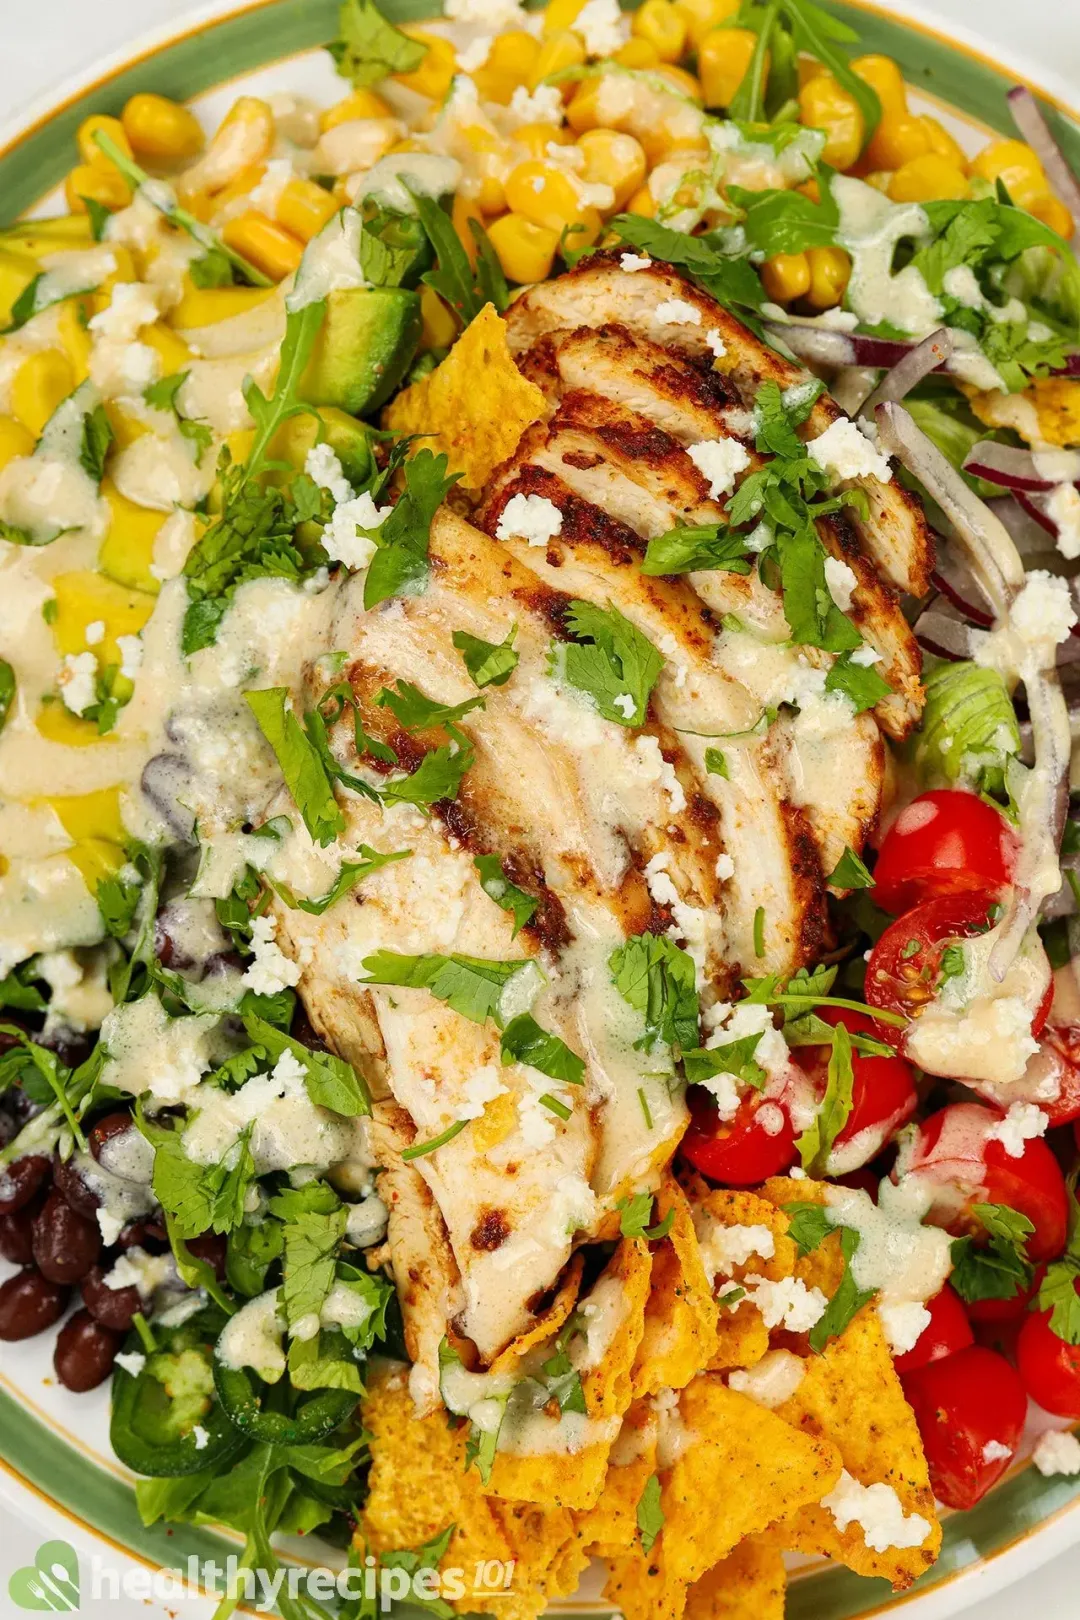 Is Southwestern Salad Healthy